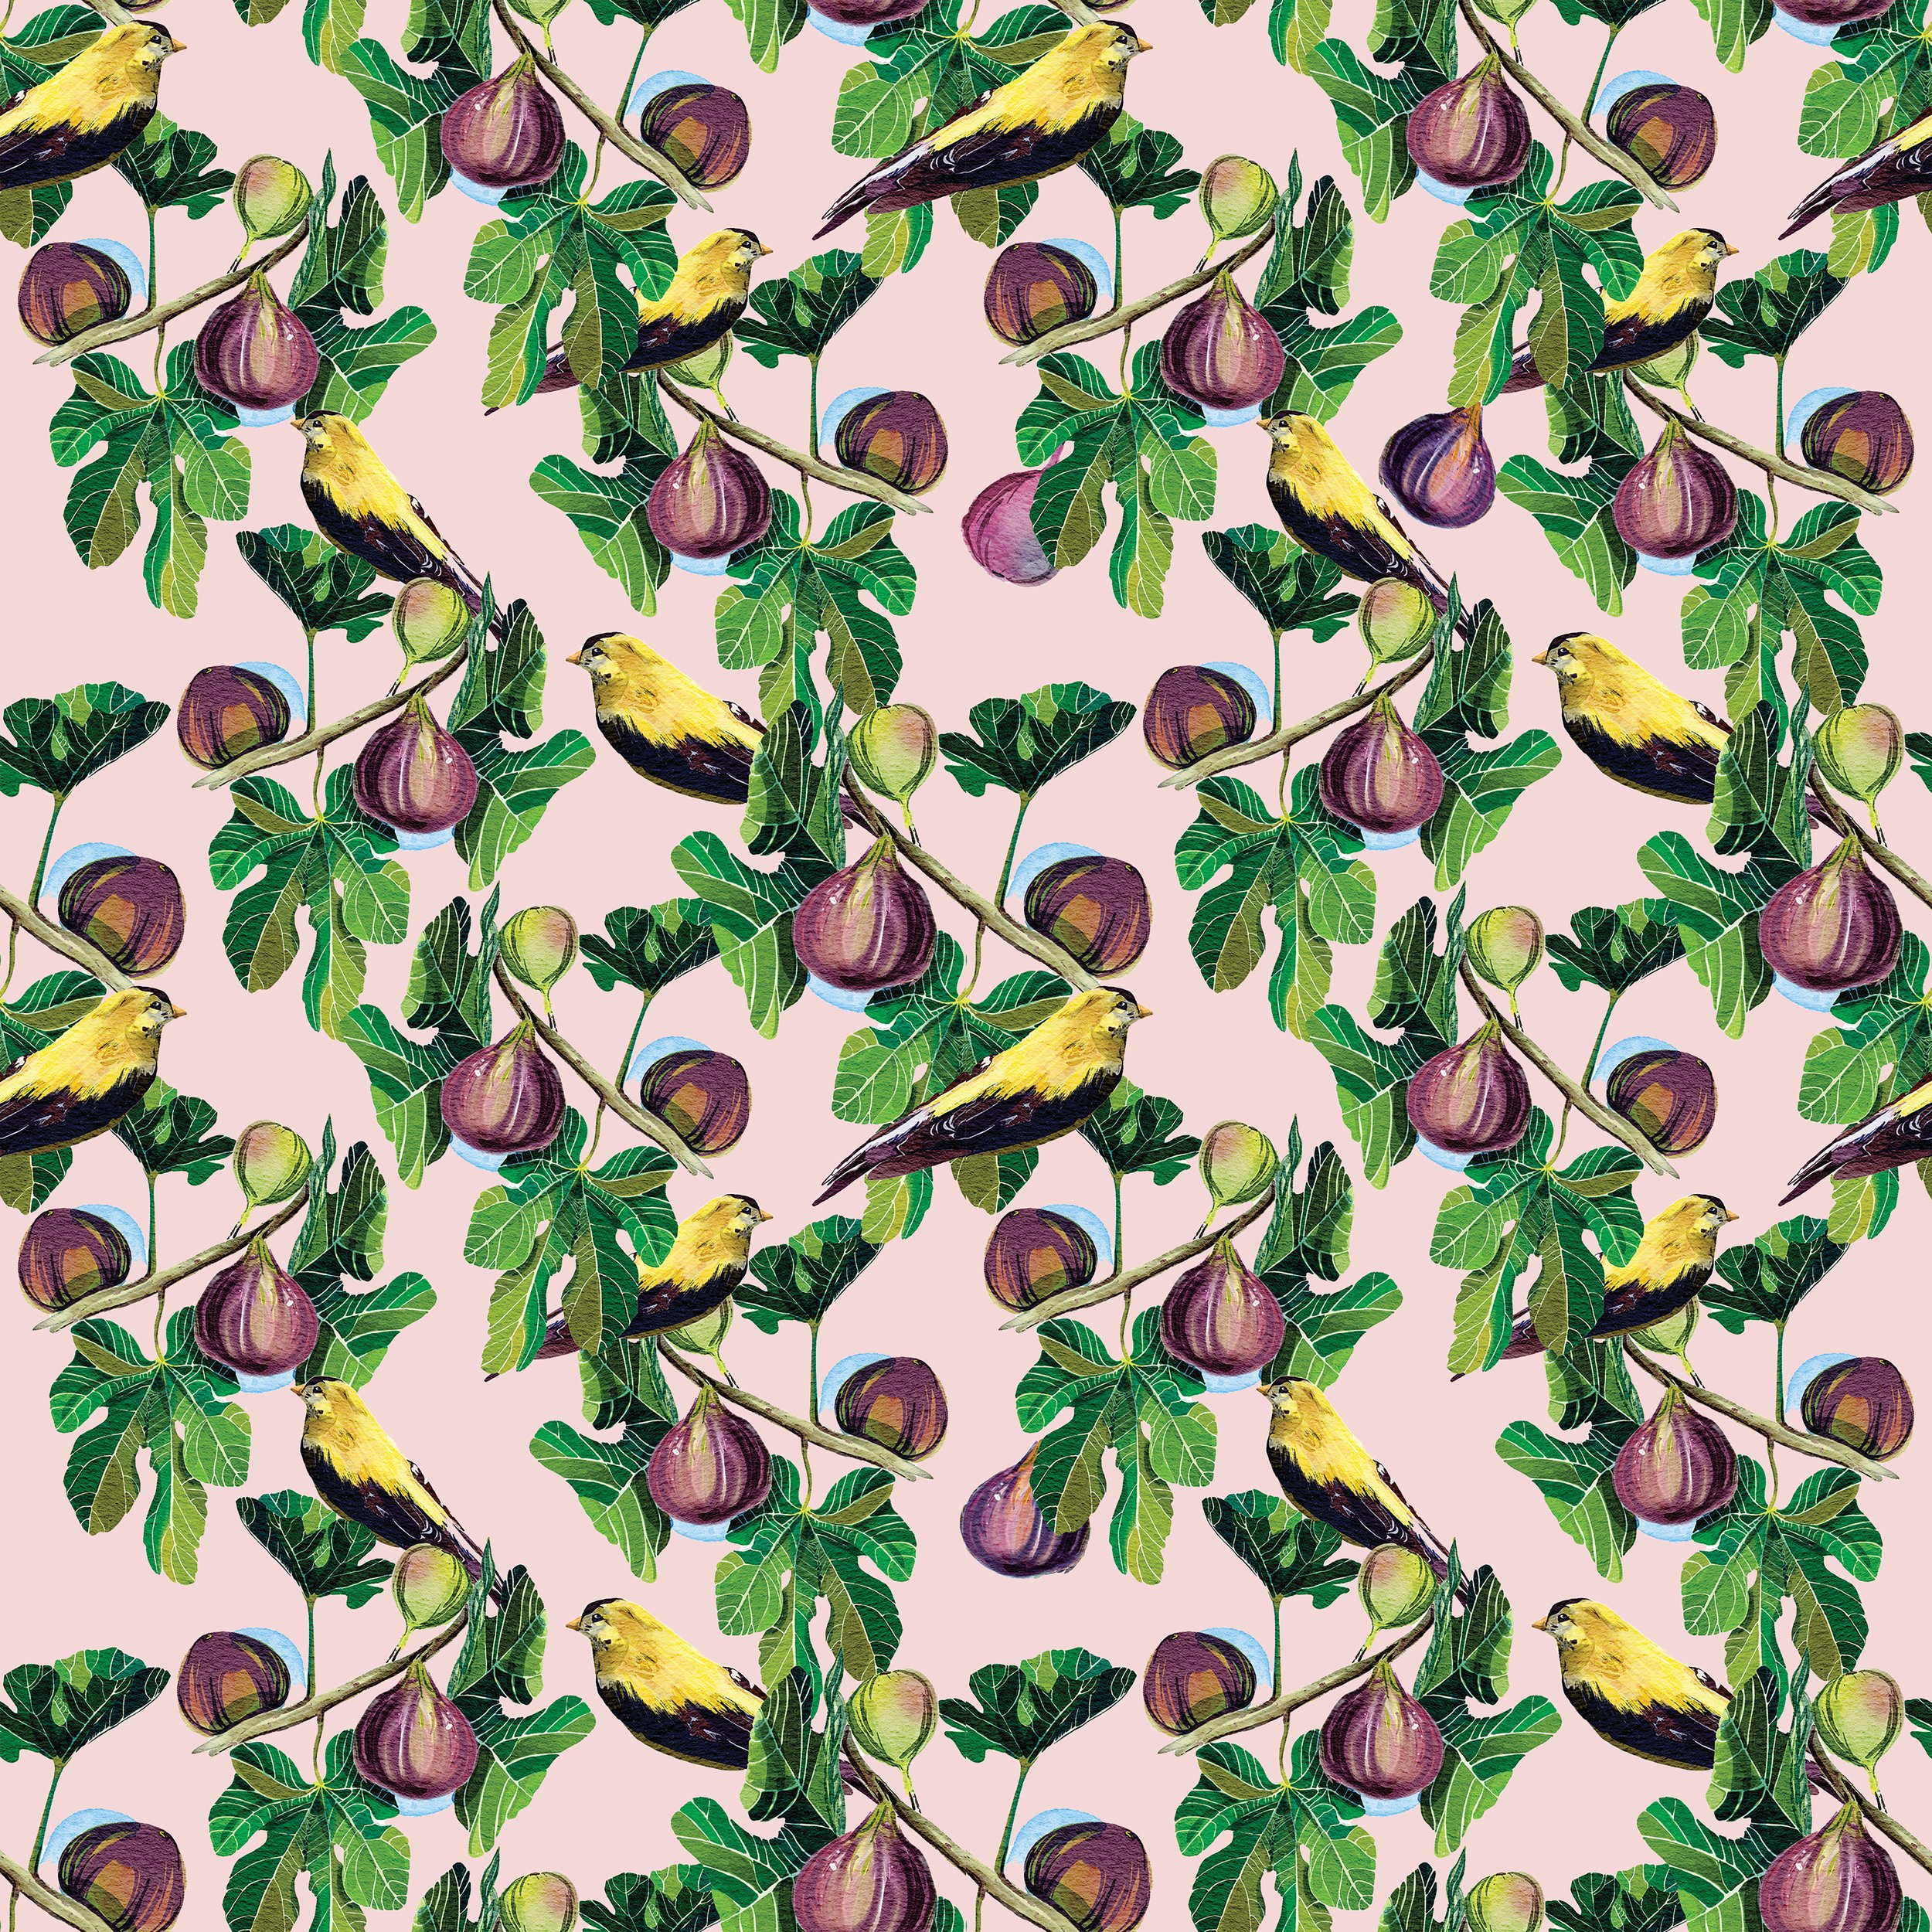 Figgy bird pattern.jpg